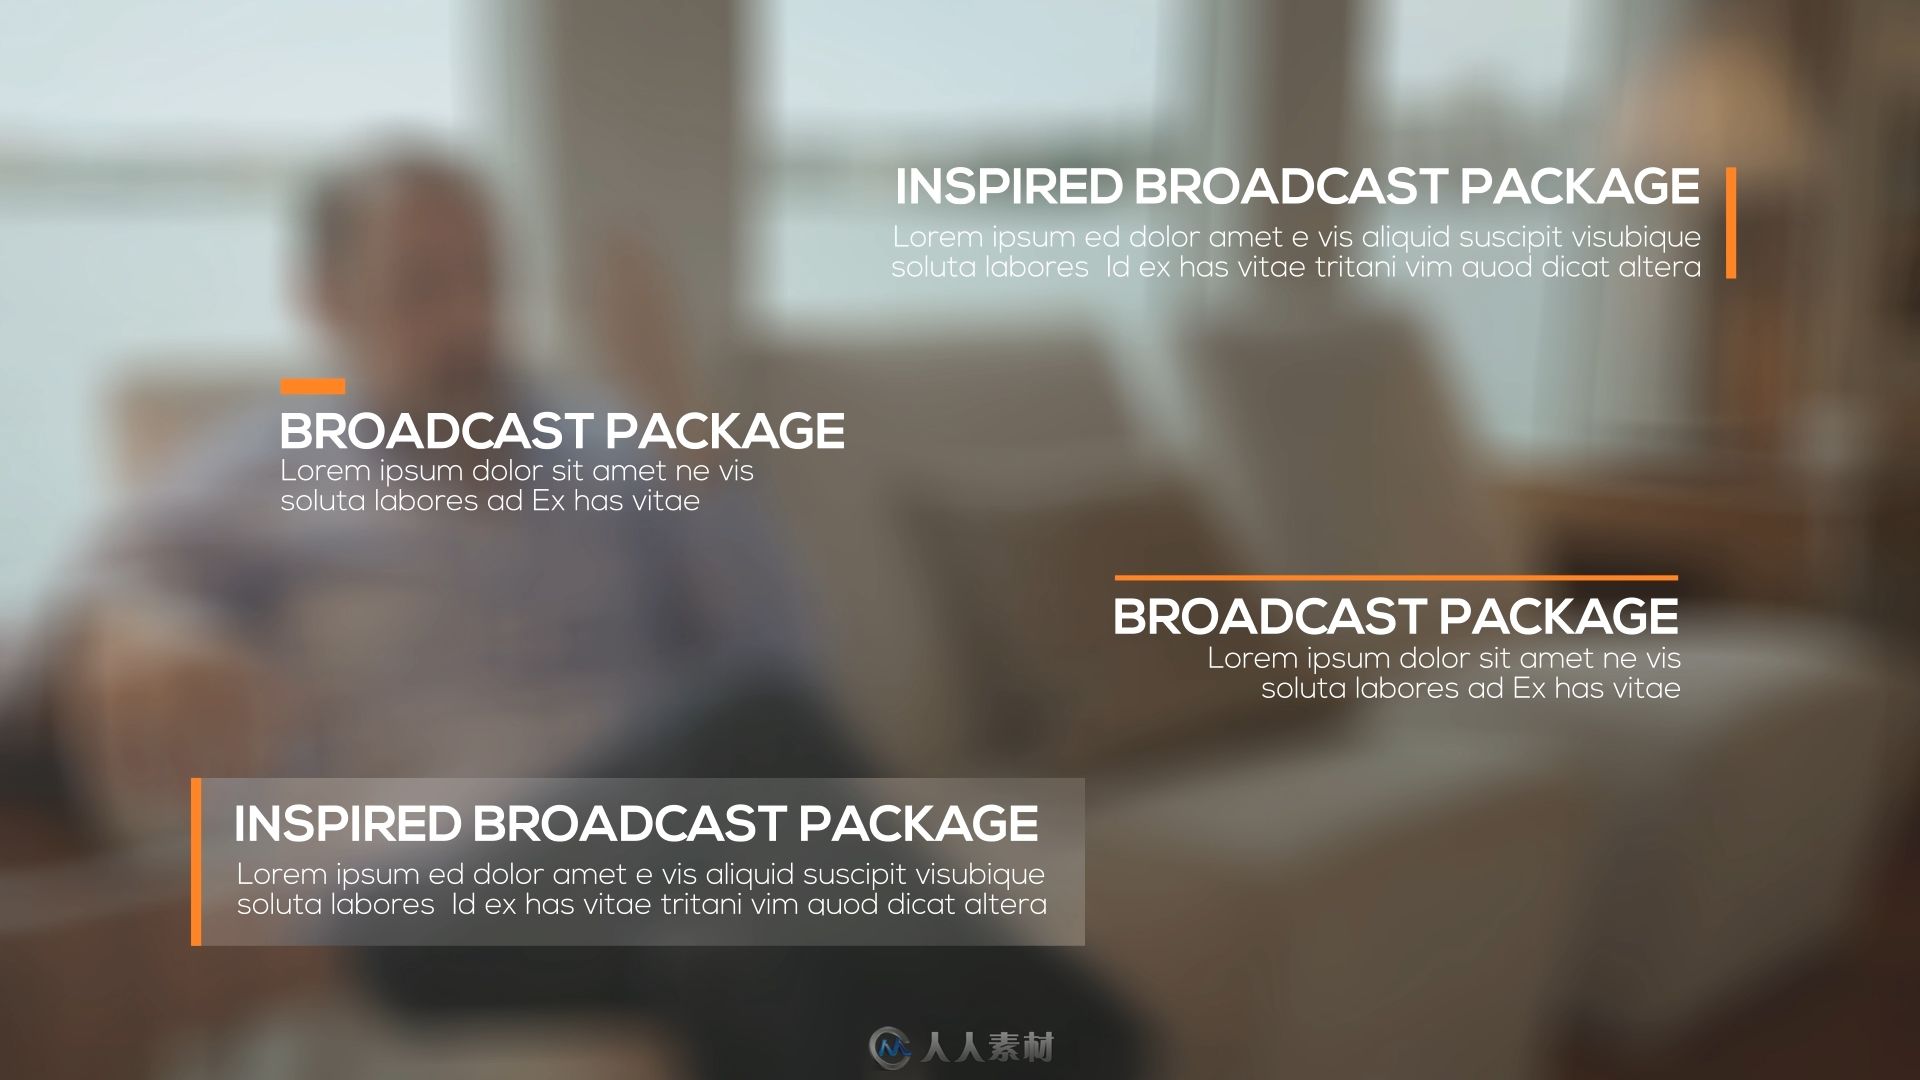 优雅时尚的电视节目广播包幻灯片AE模板 Videohive Inspired Broadcast Package...